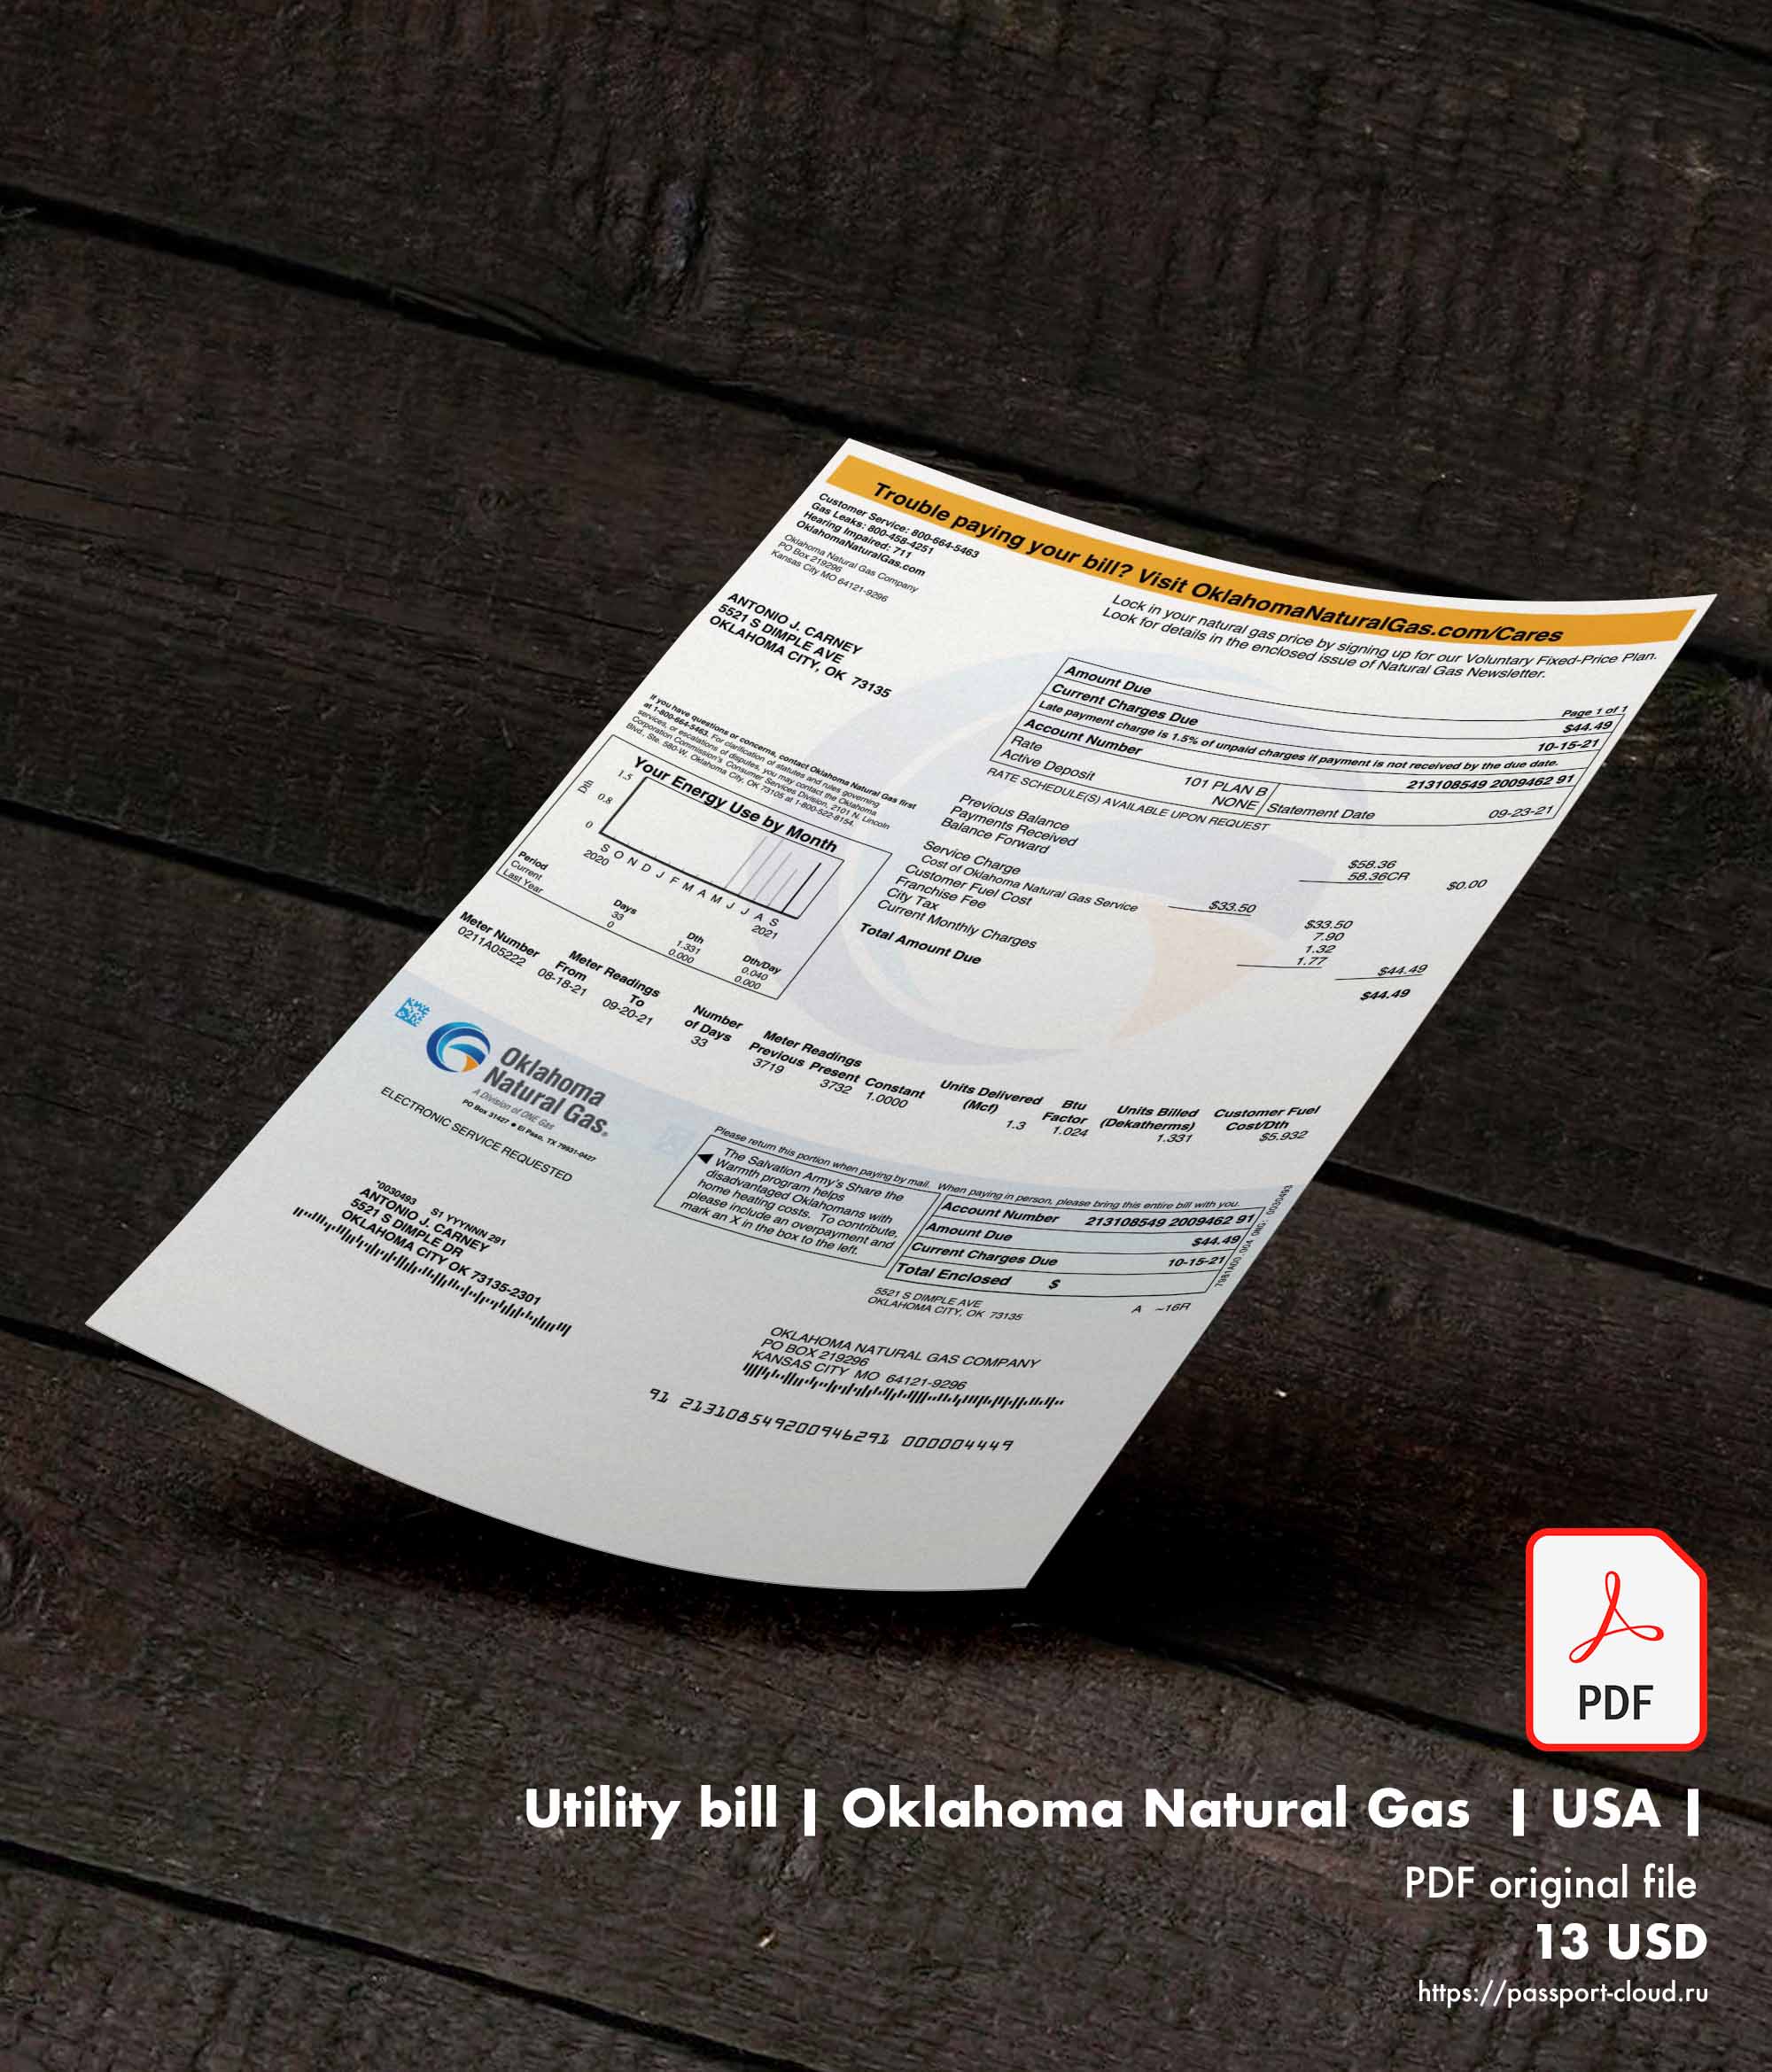 Utility bill | Oklahoma Natural Gas  | USA |1